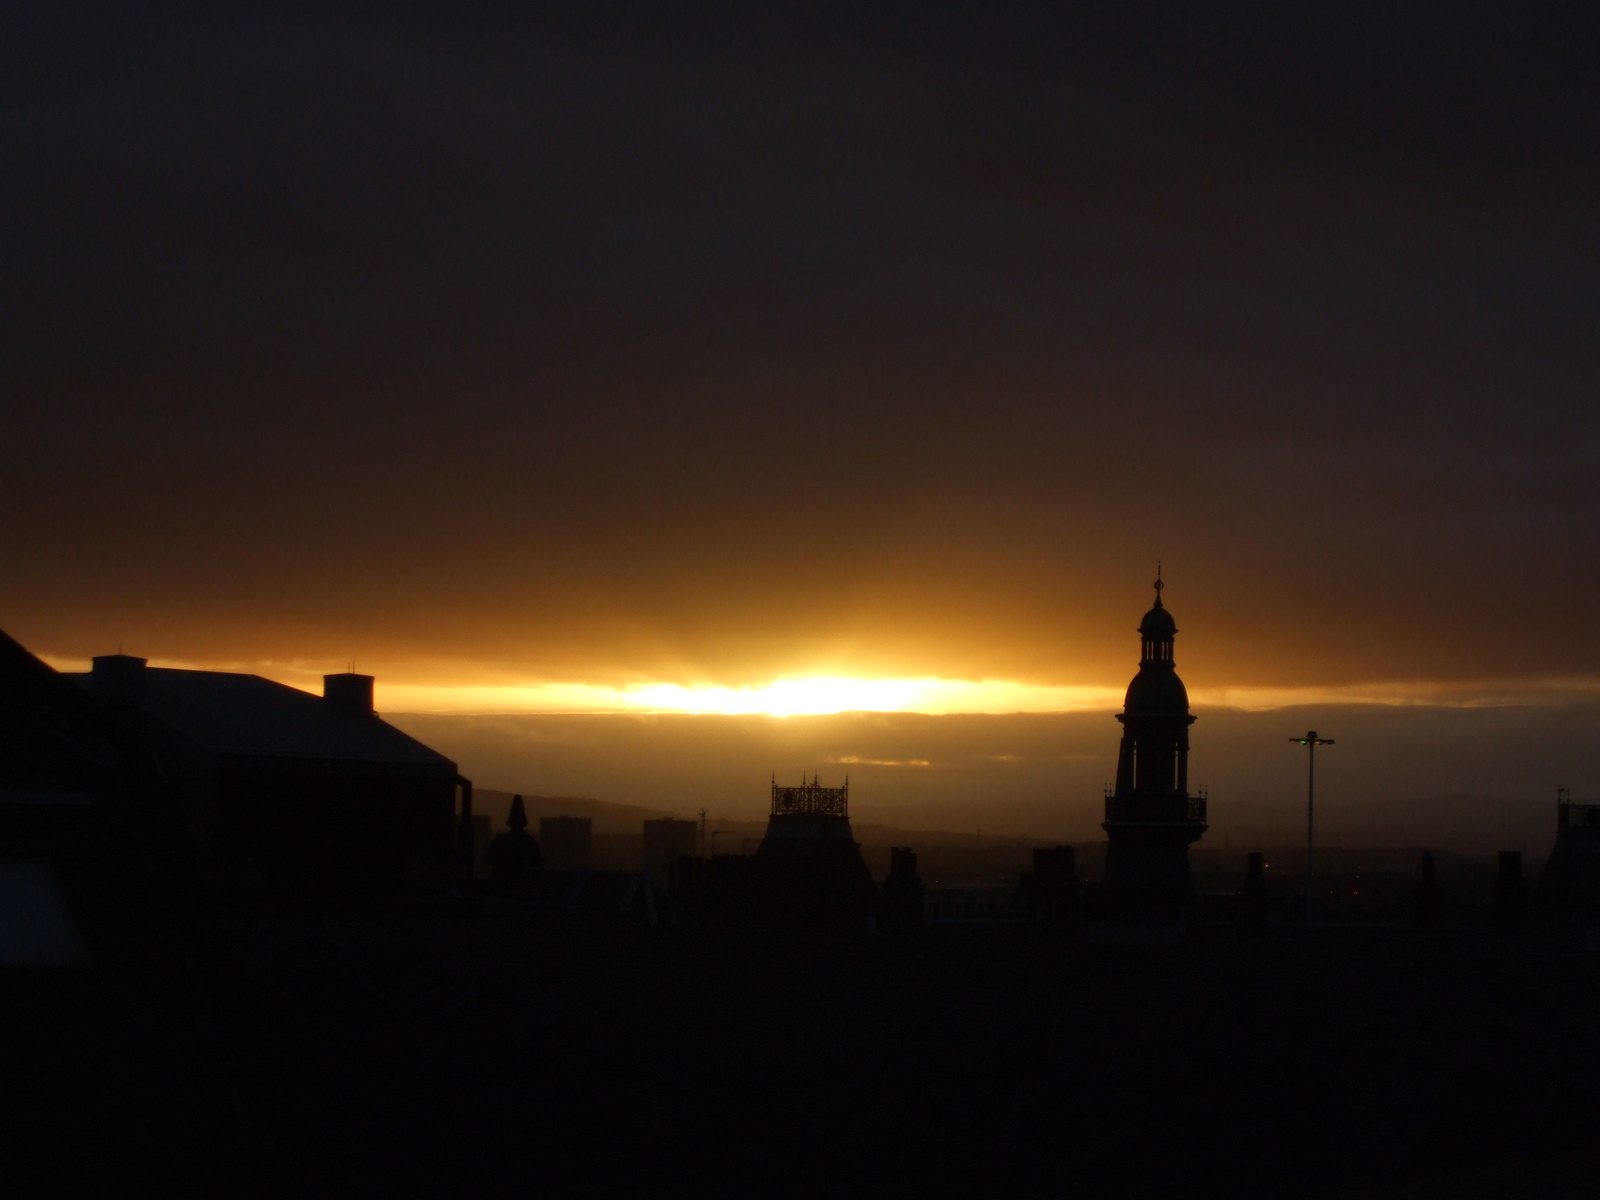 naplemente Glasgowban